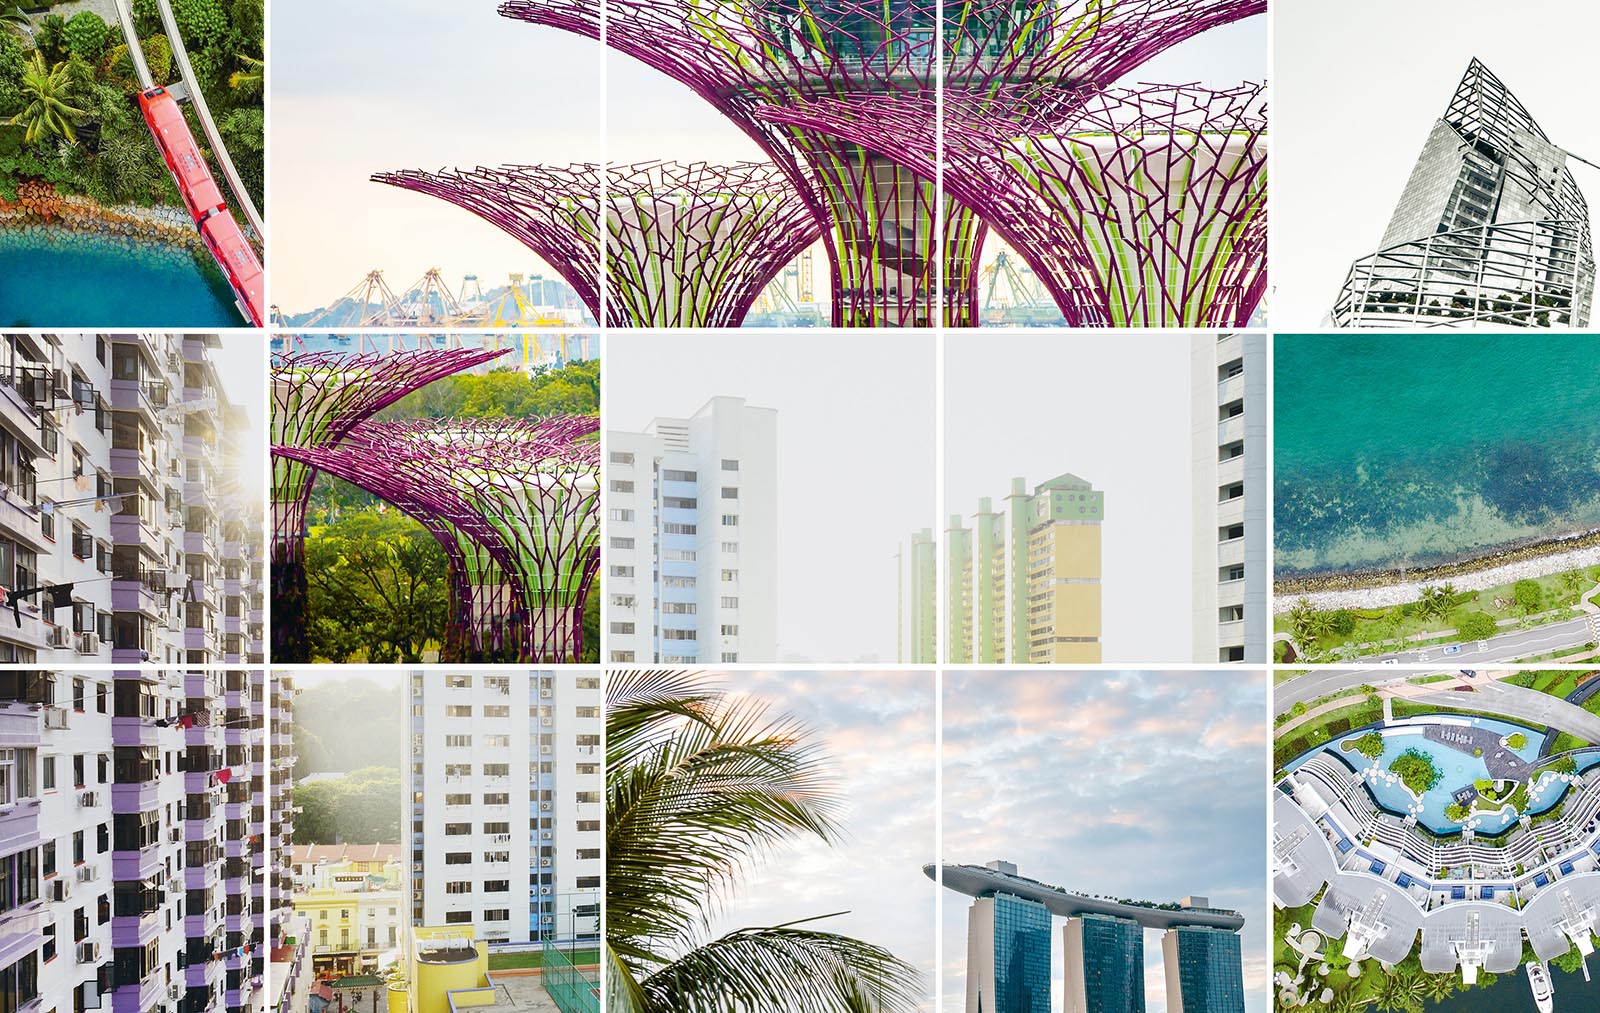 Urban planning in Singapore